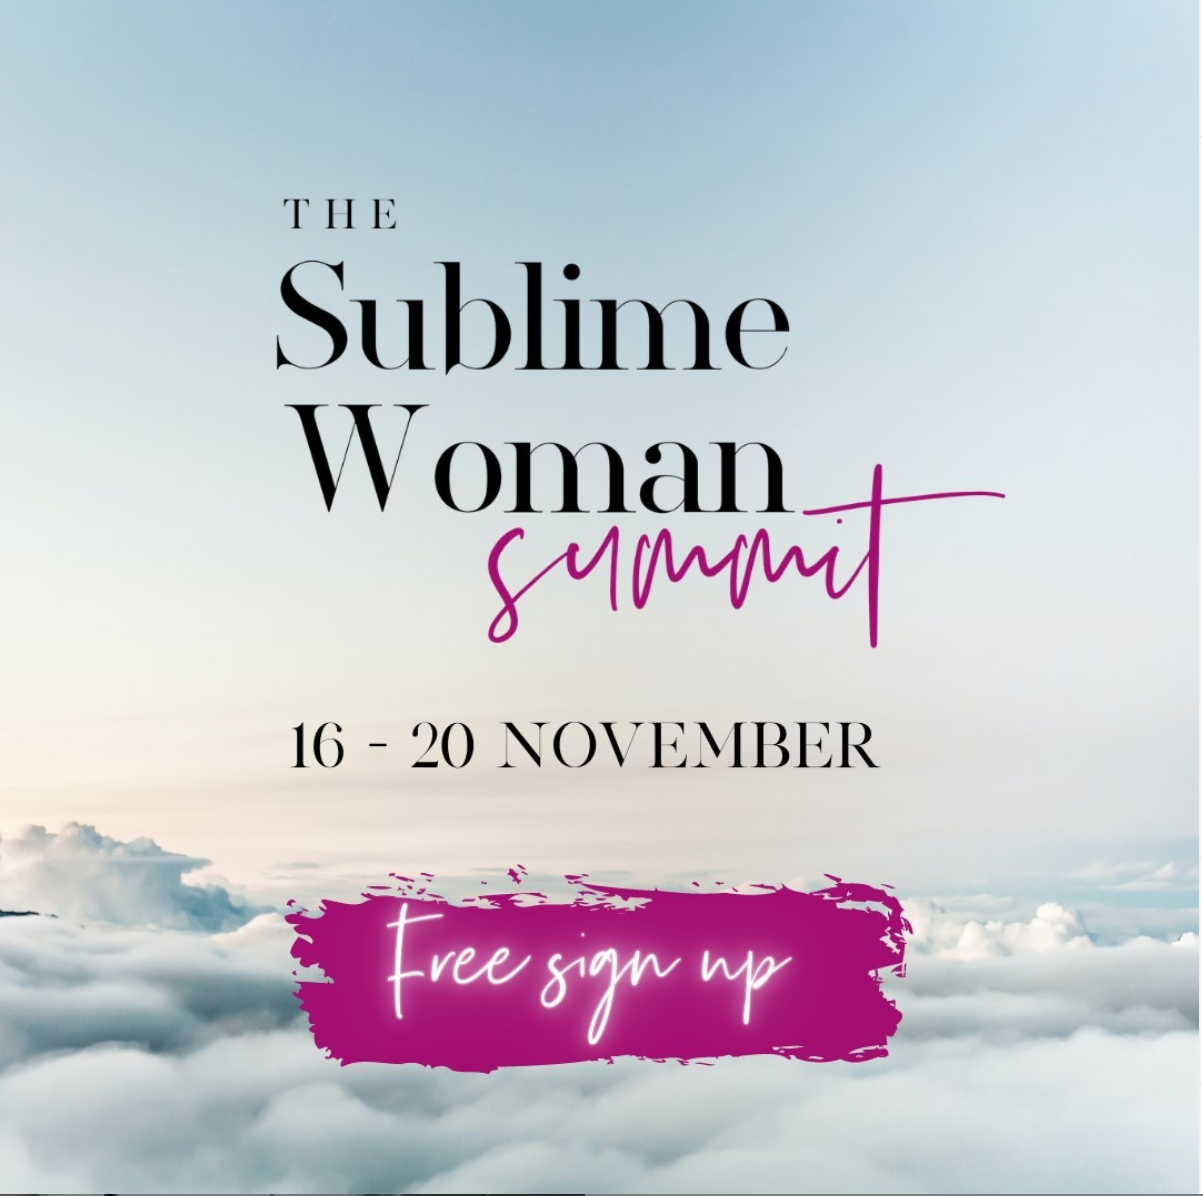 SublimeWoman_LeenS_2020-11.png